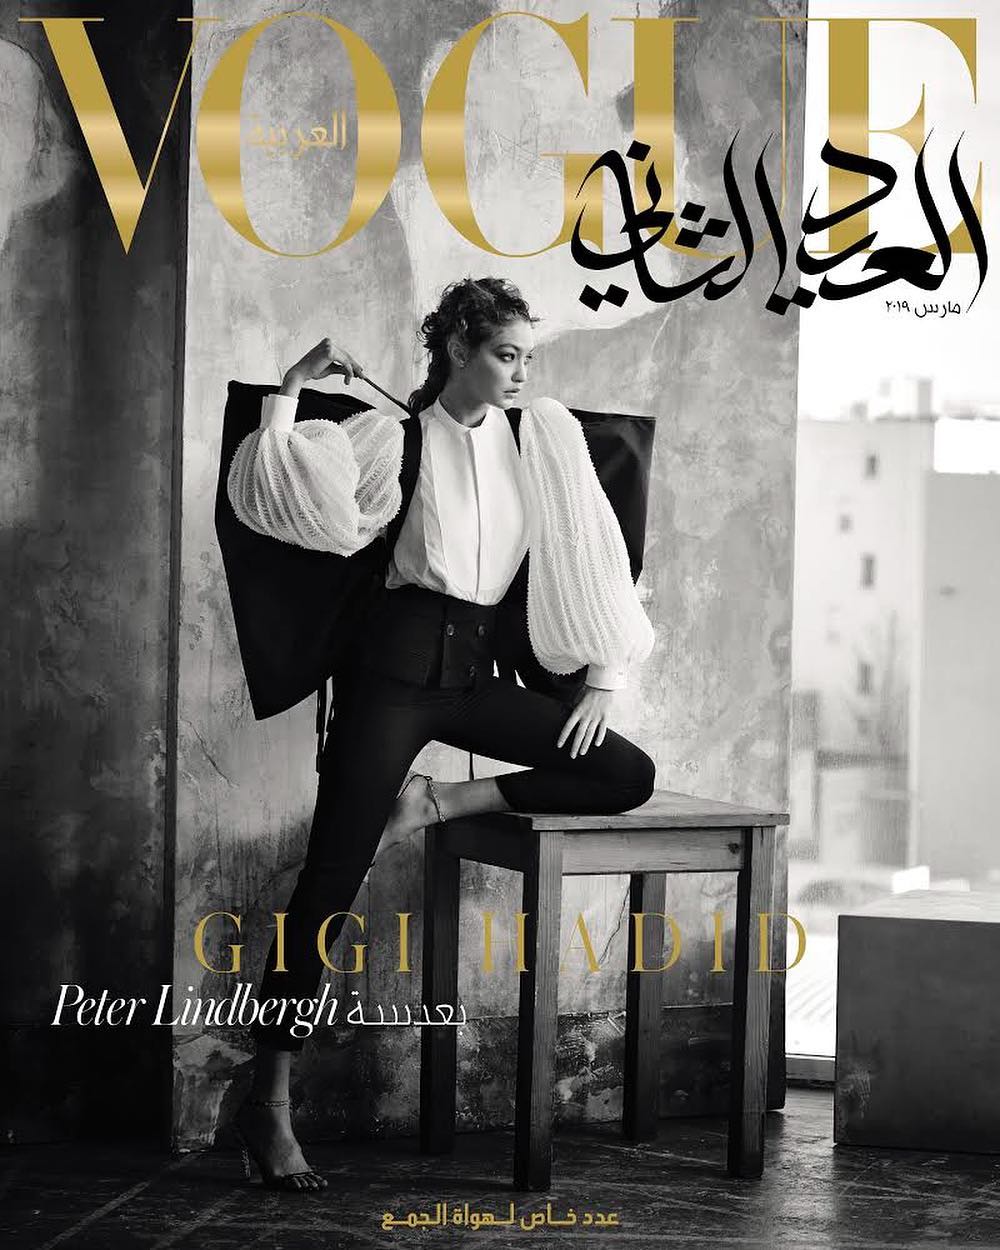 Michael Philouze | Vogue International | Photographed by Peter Lindbergh | 50